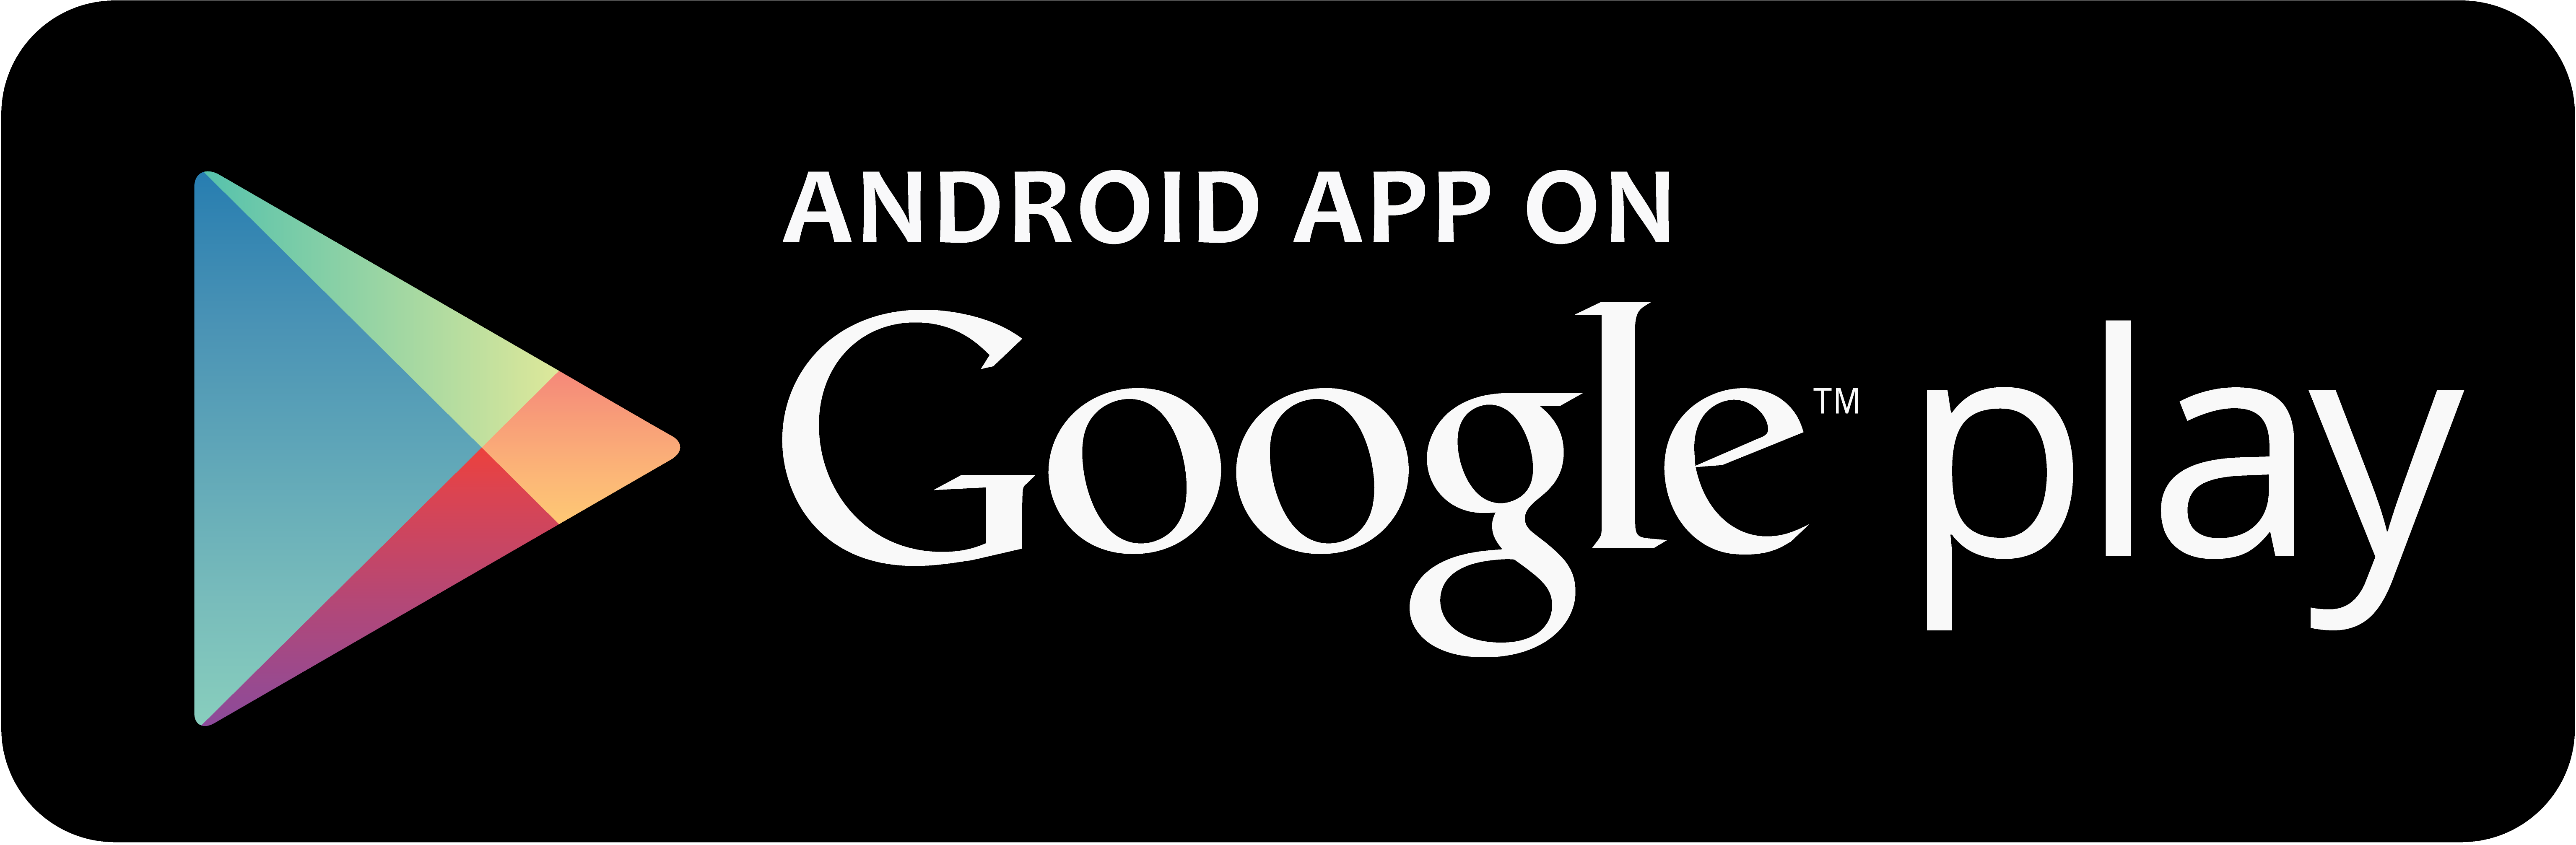 Google Play Android logo